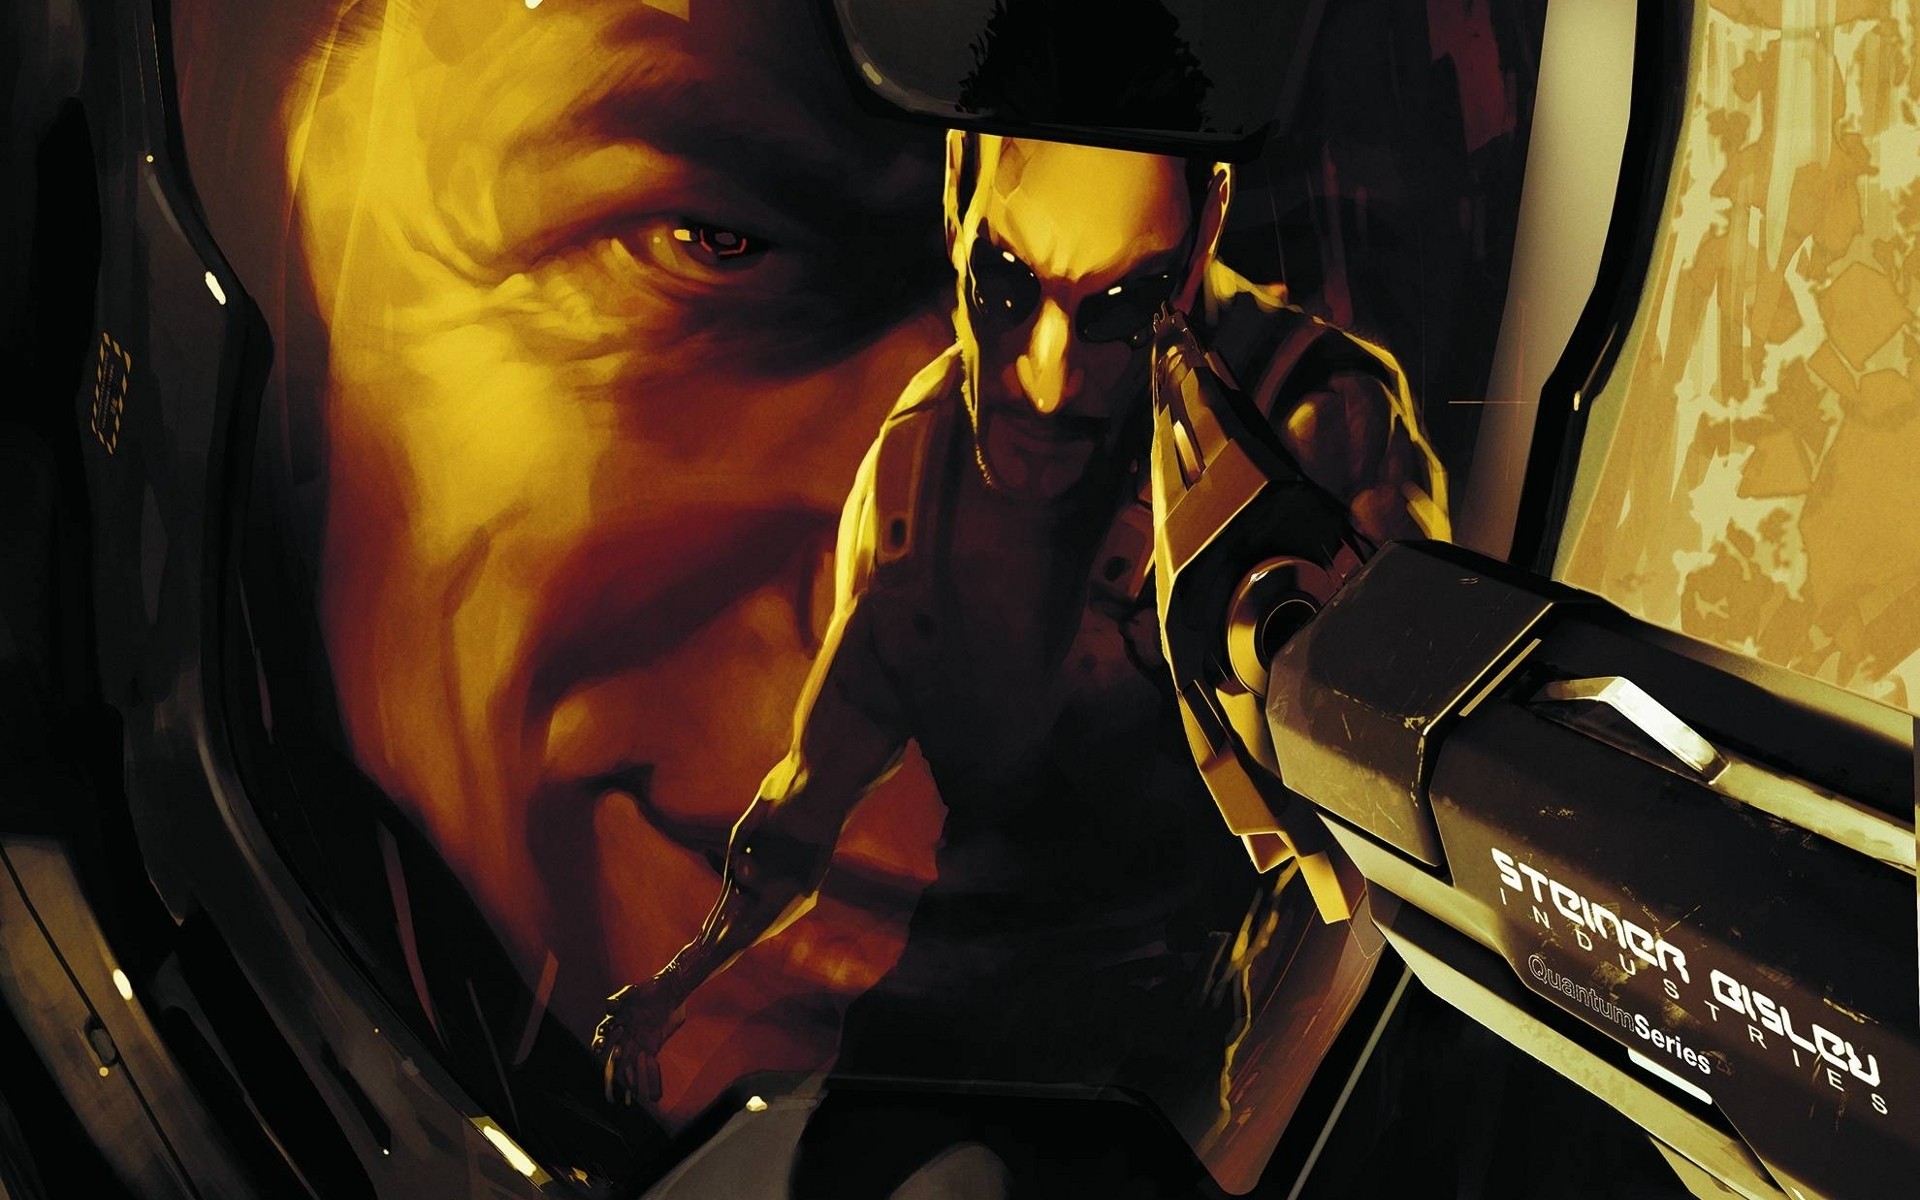 Deus Ex: Human Revolution Wallpaper